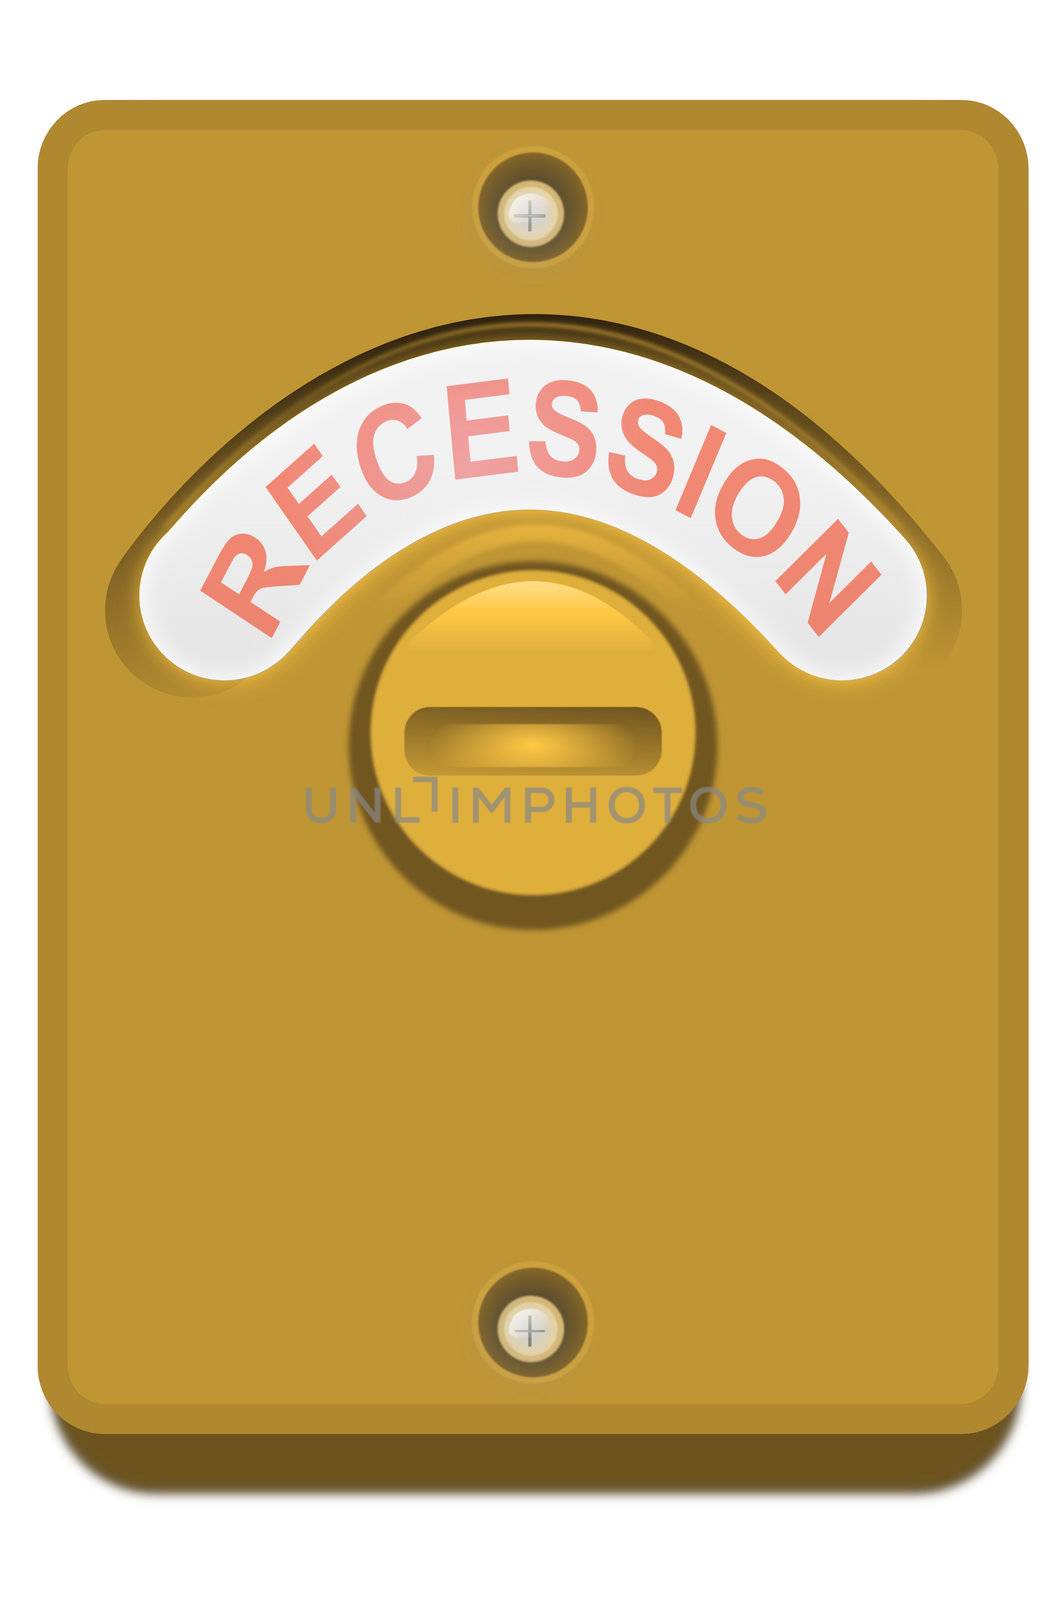 Recession concept. by 72soul